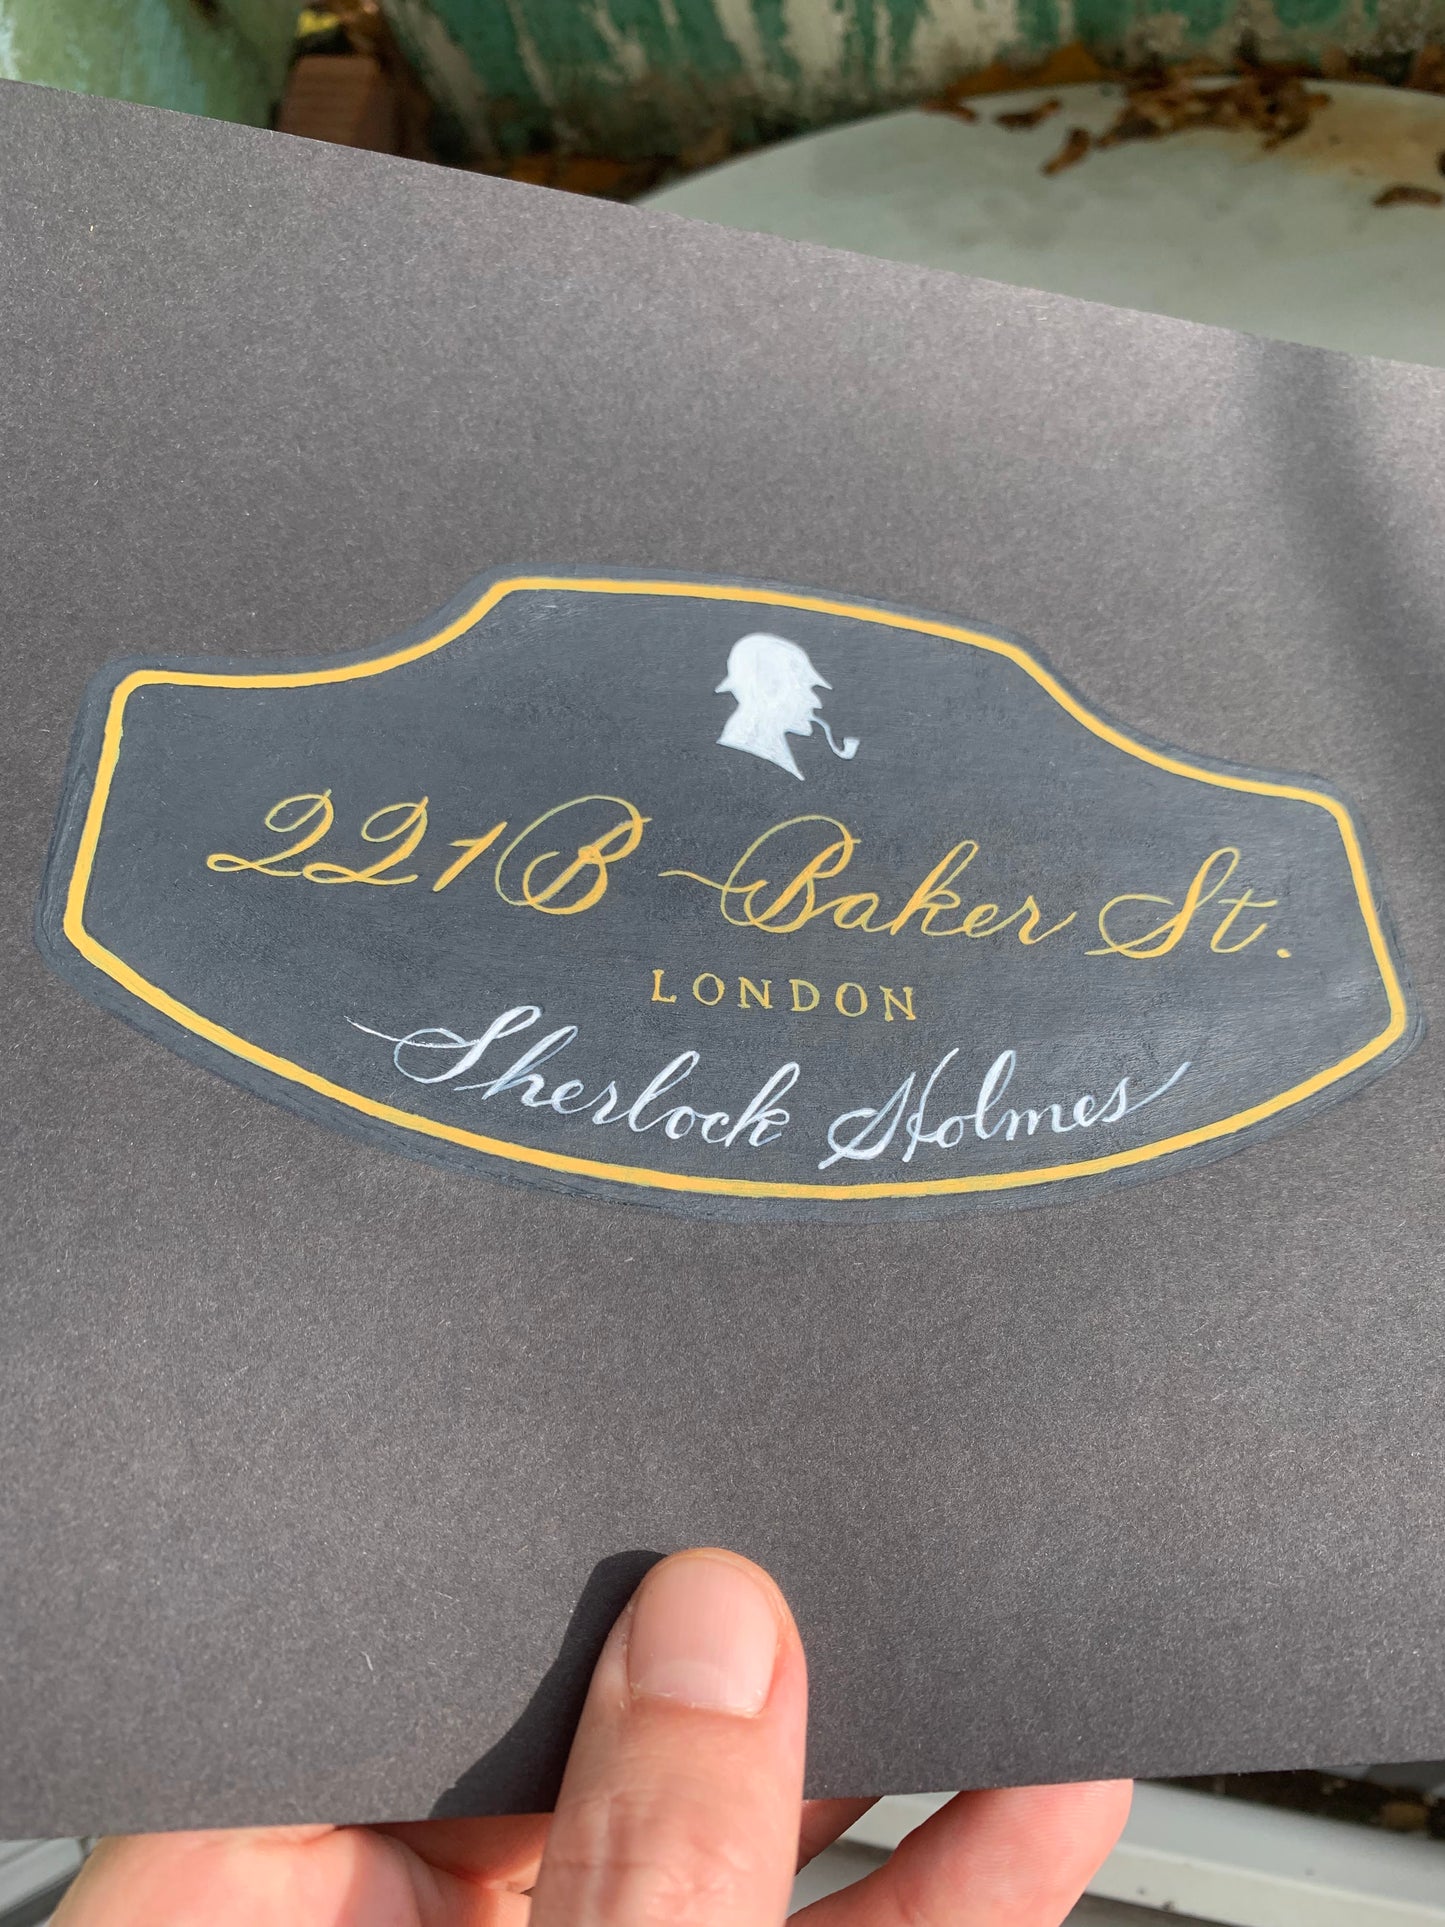 Sherlock Holmes address plaque